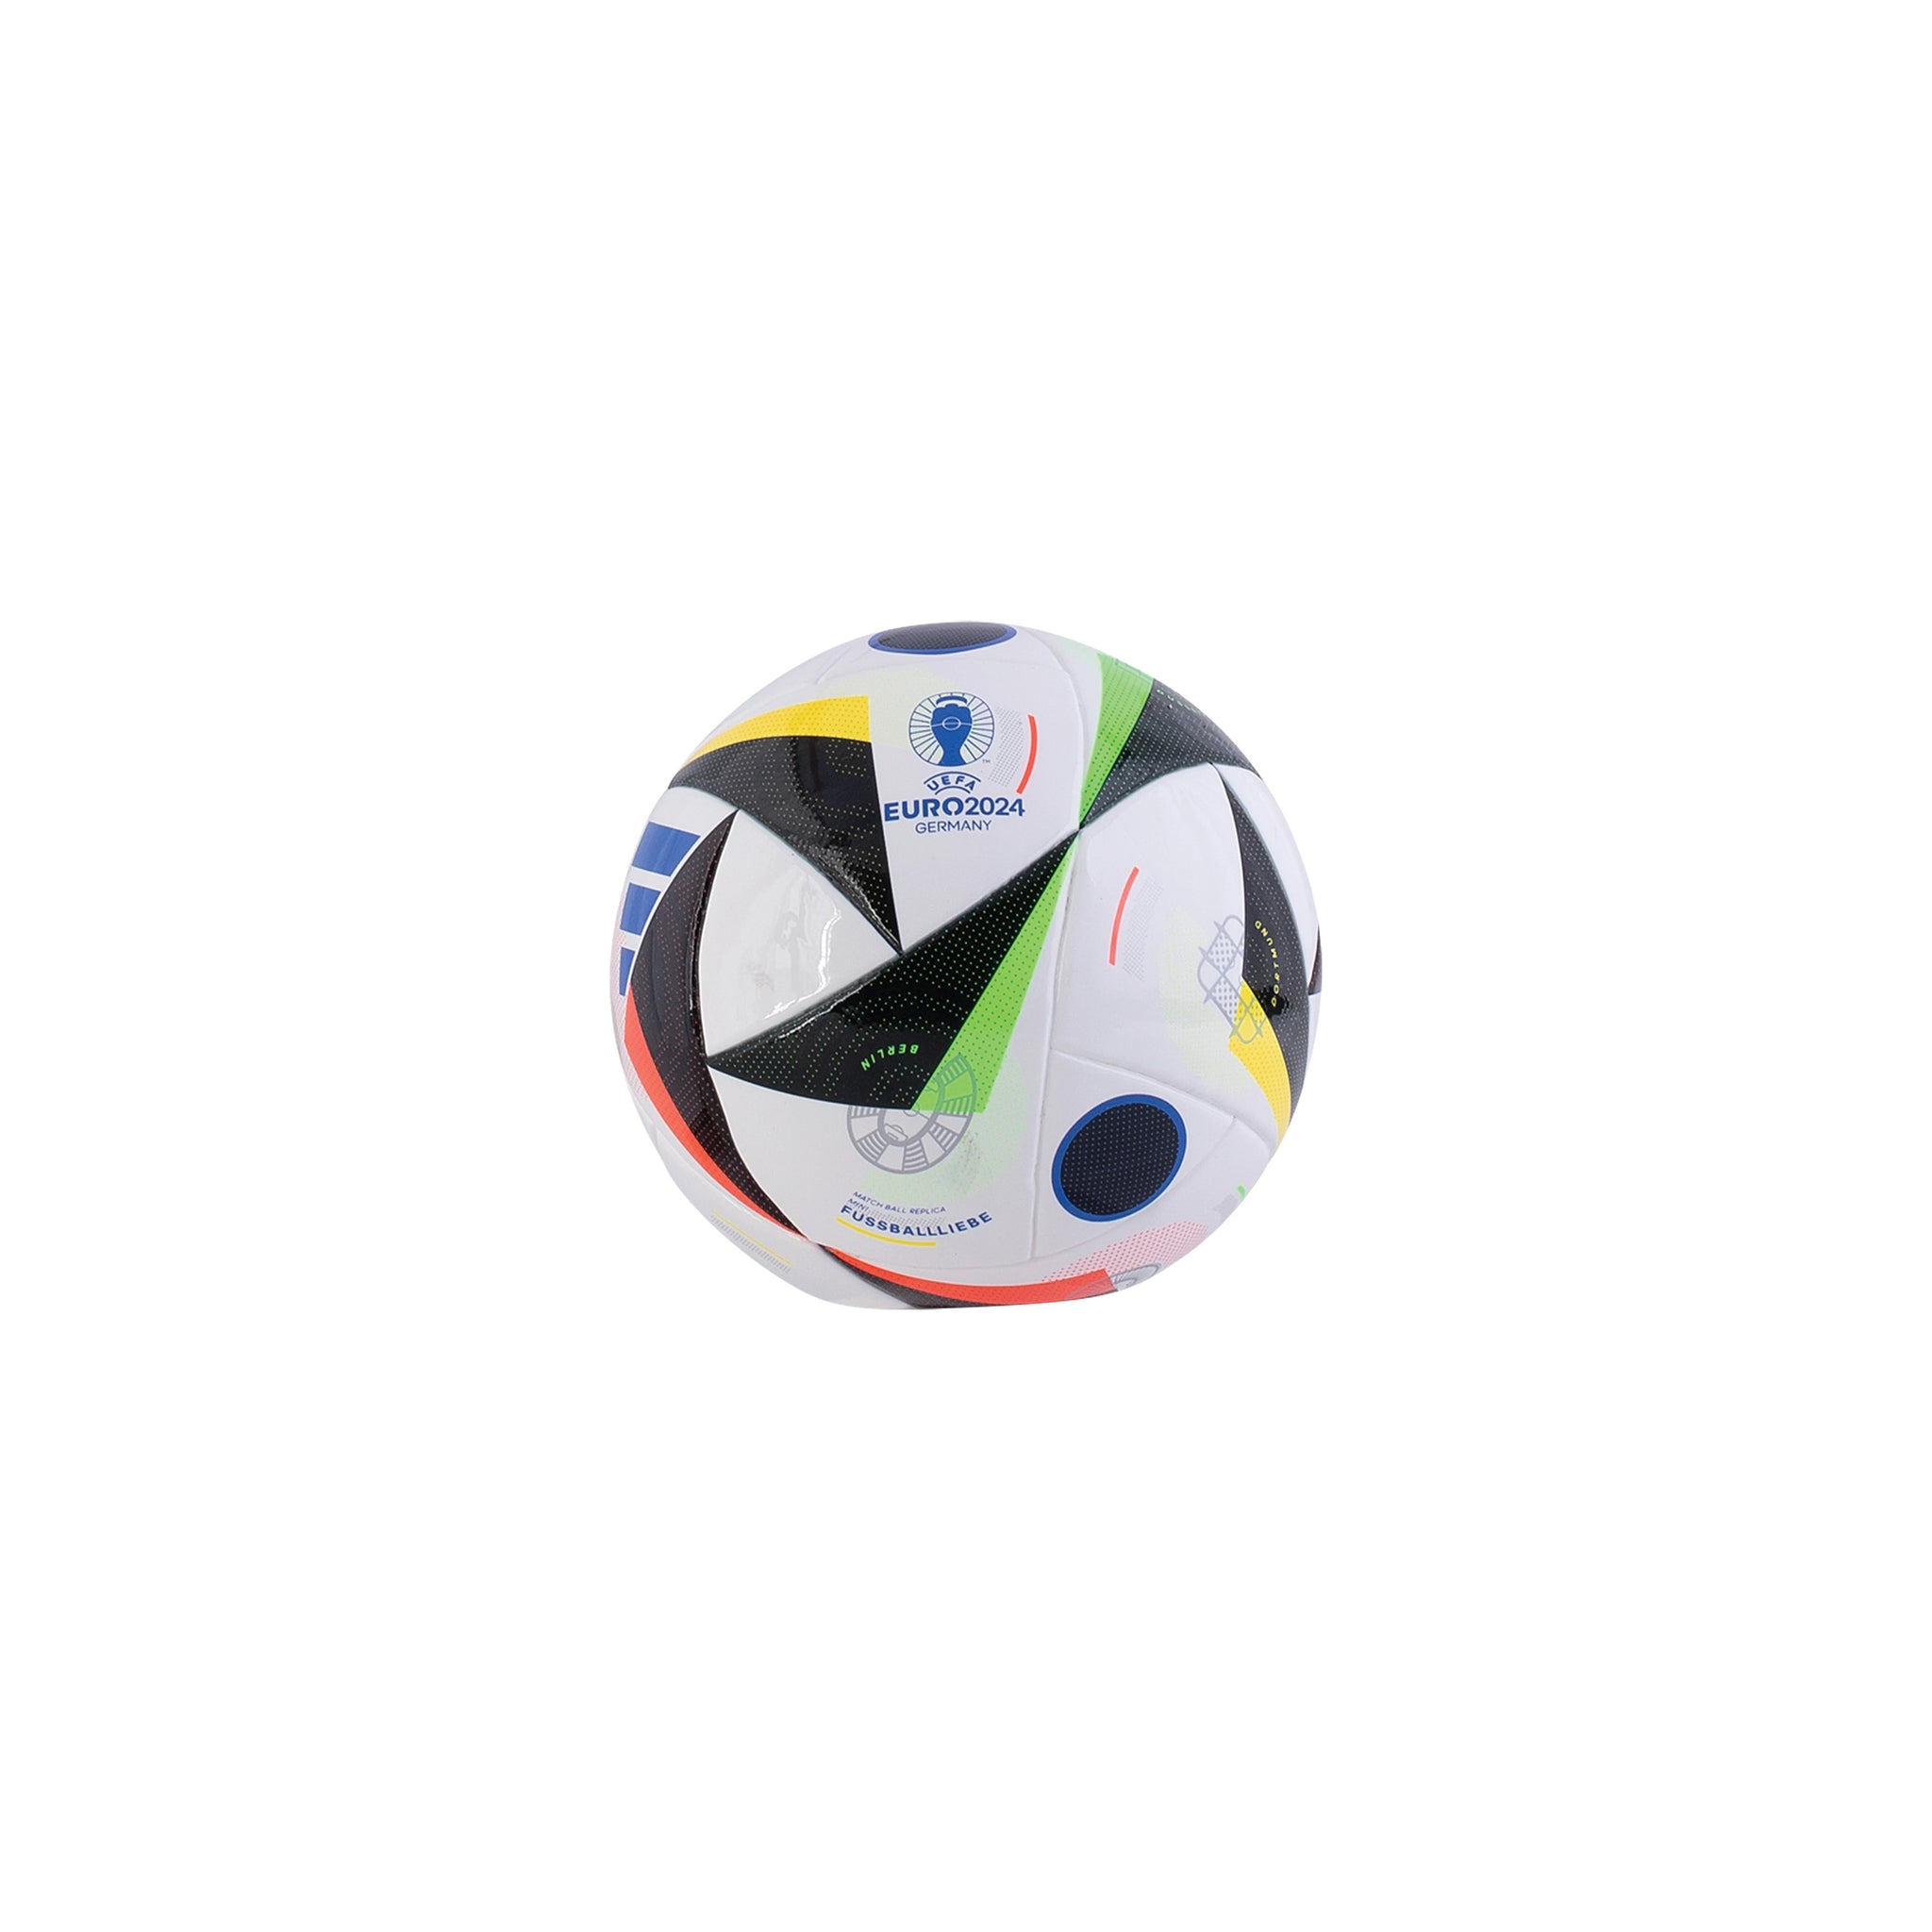 ADIDAS Euro 2024 Mini Skills Ball